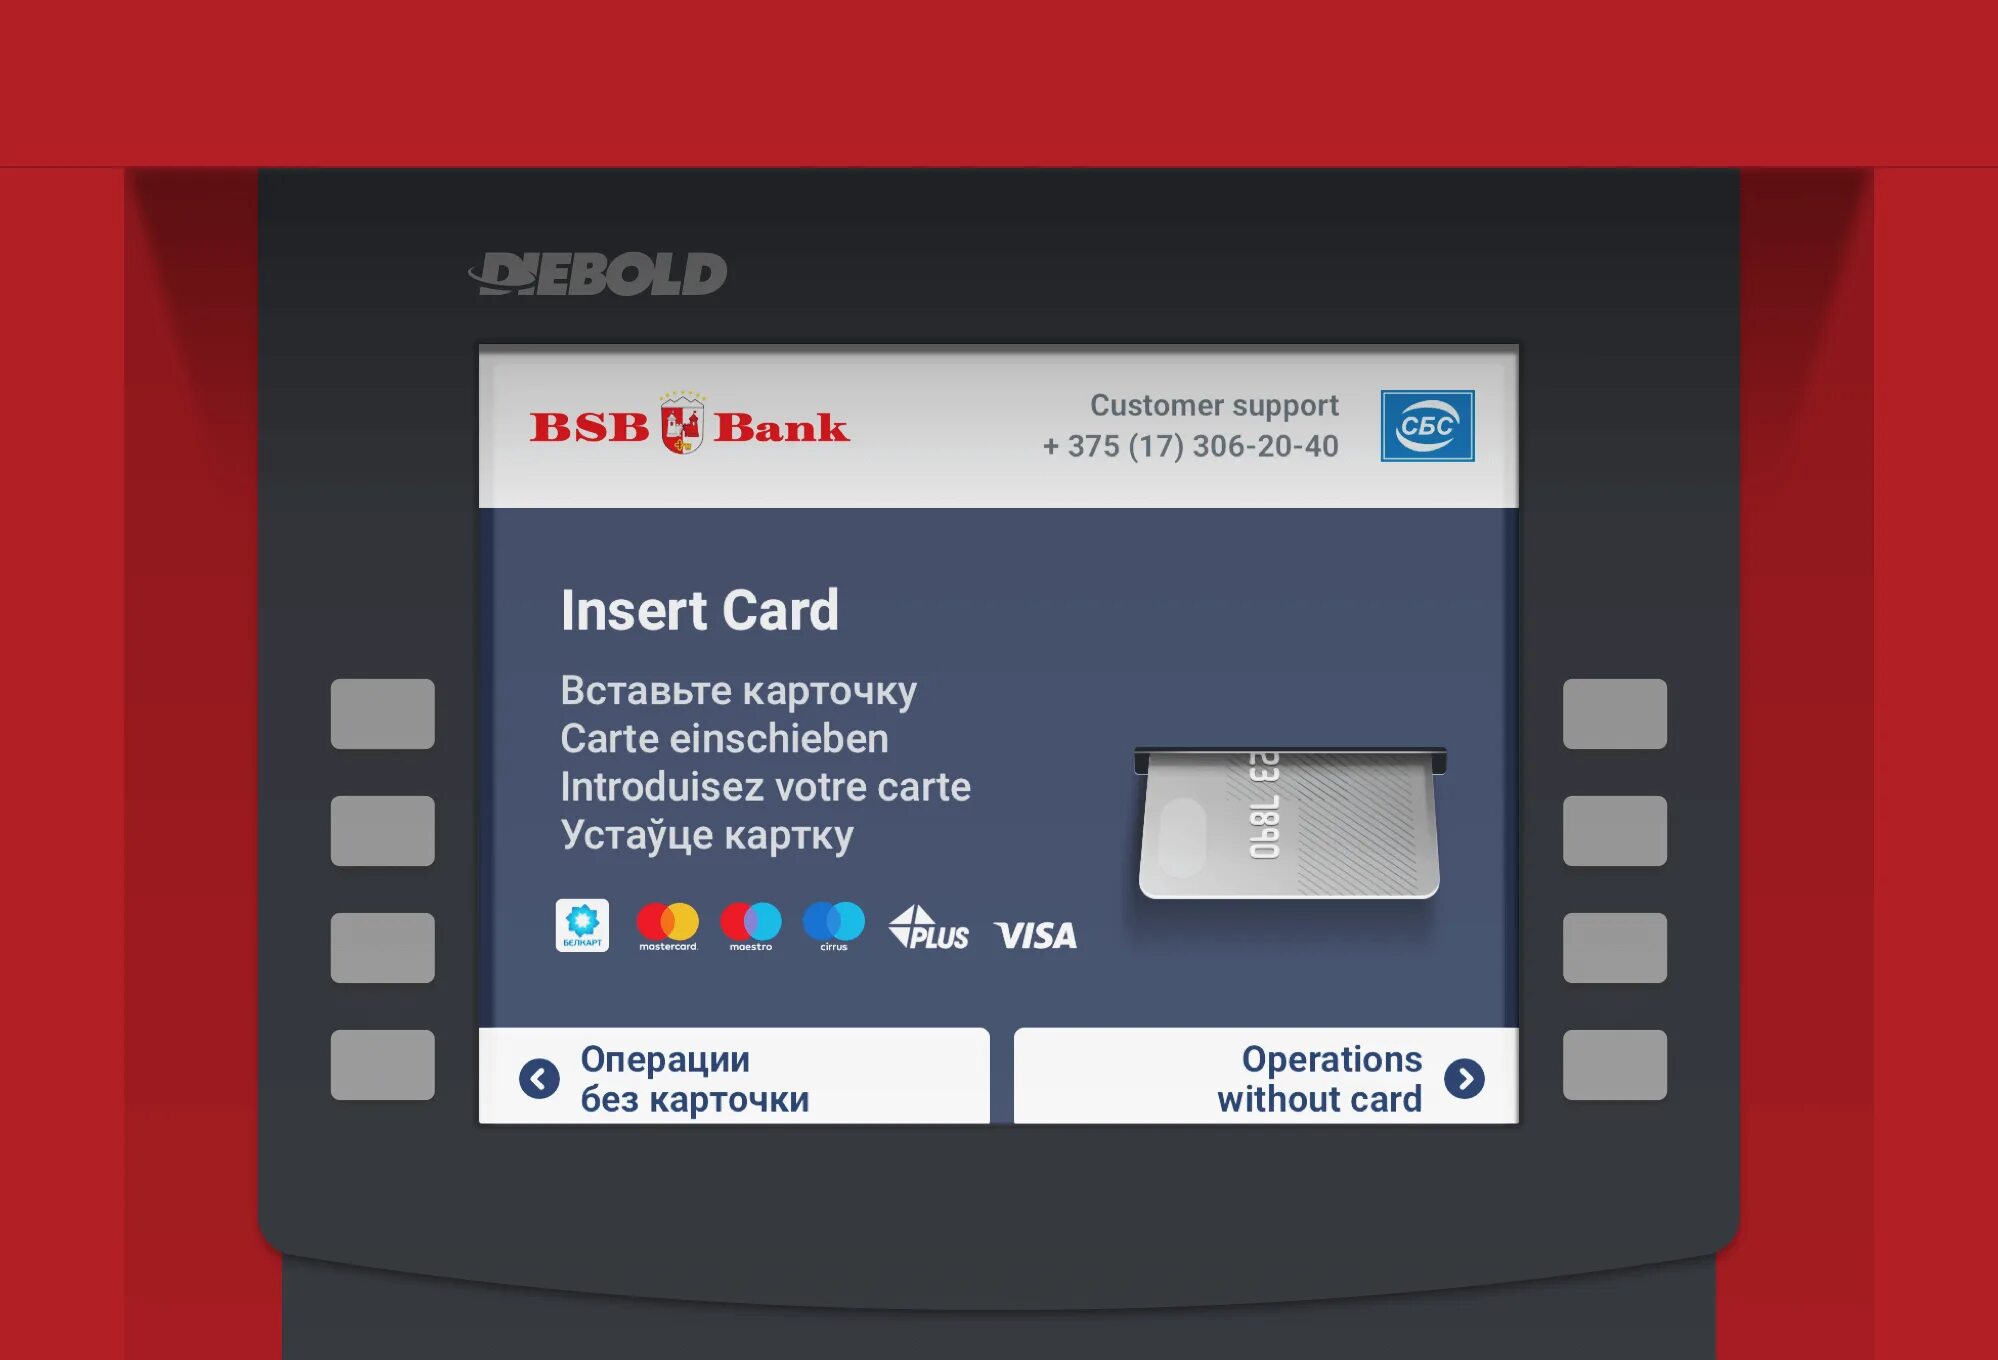 Сбс банк. Интерфейс банкомата. Банкомат (ATM). Дизайн интерфейса терминалов. Дизайн банкомата.